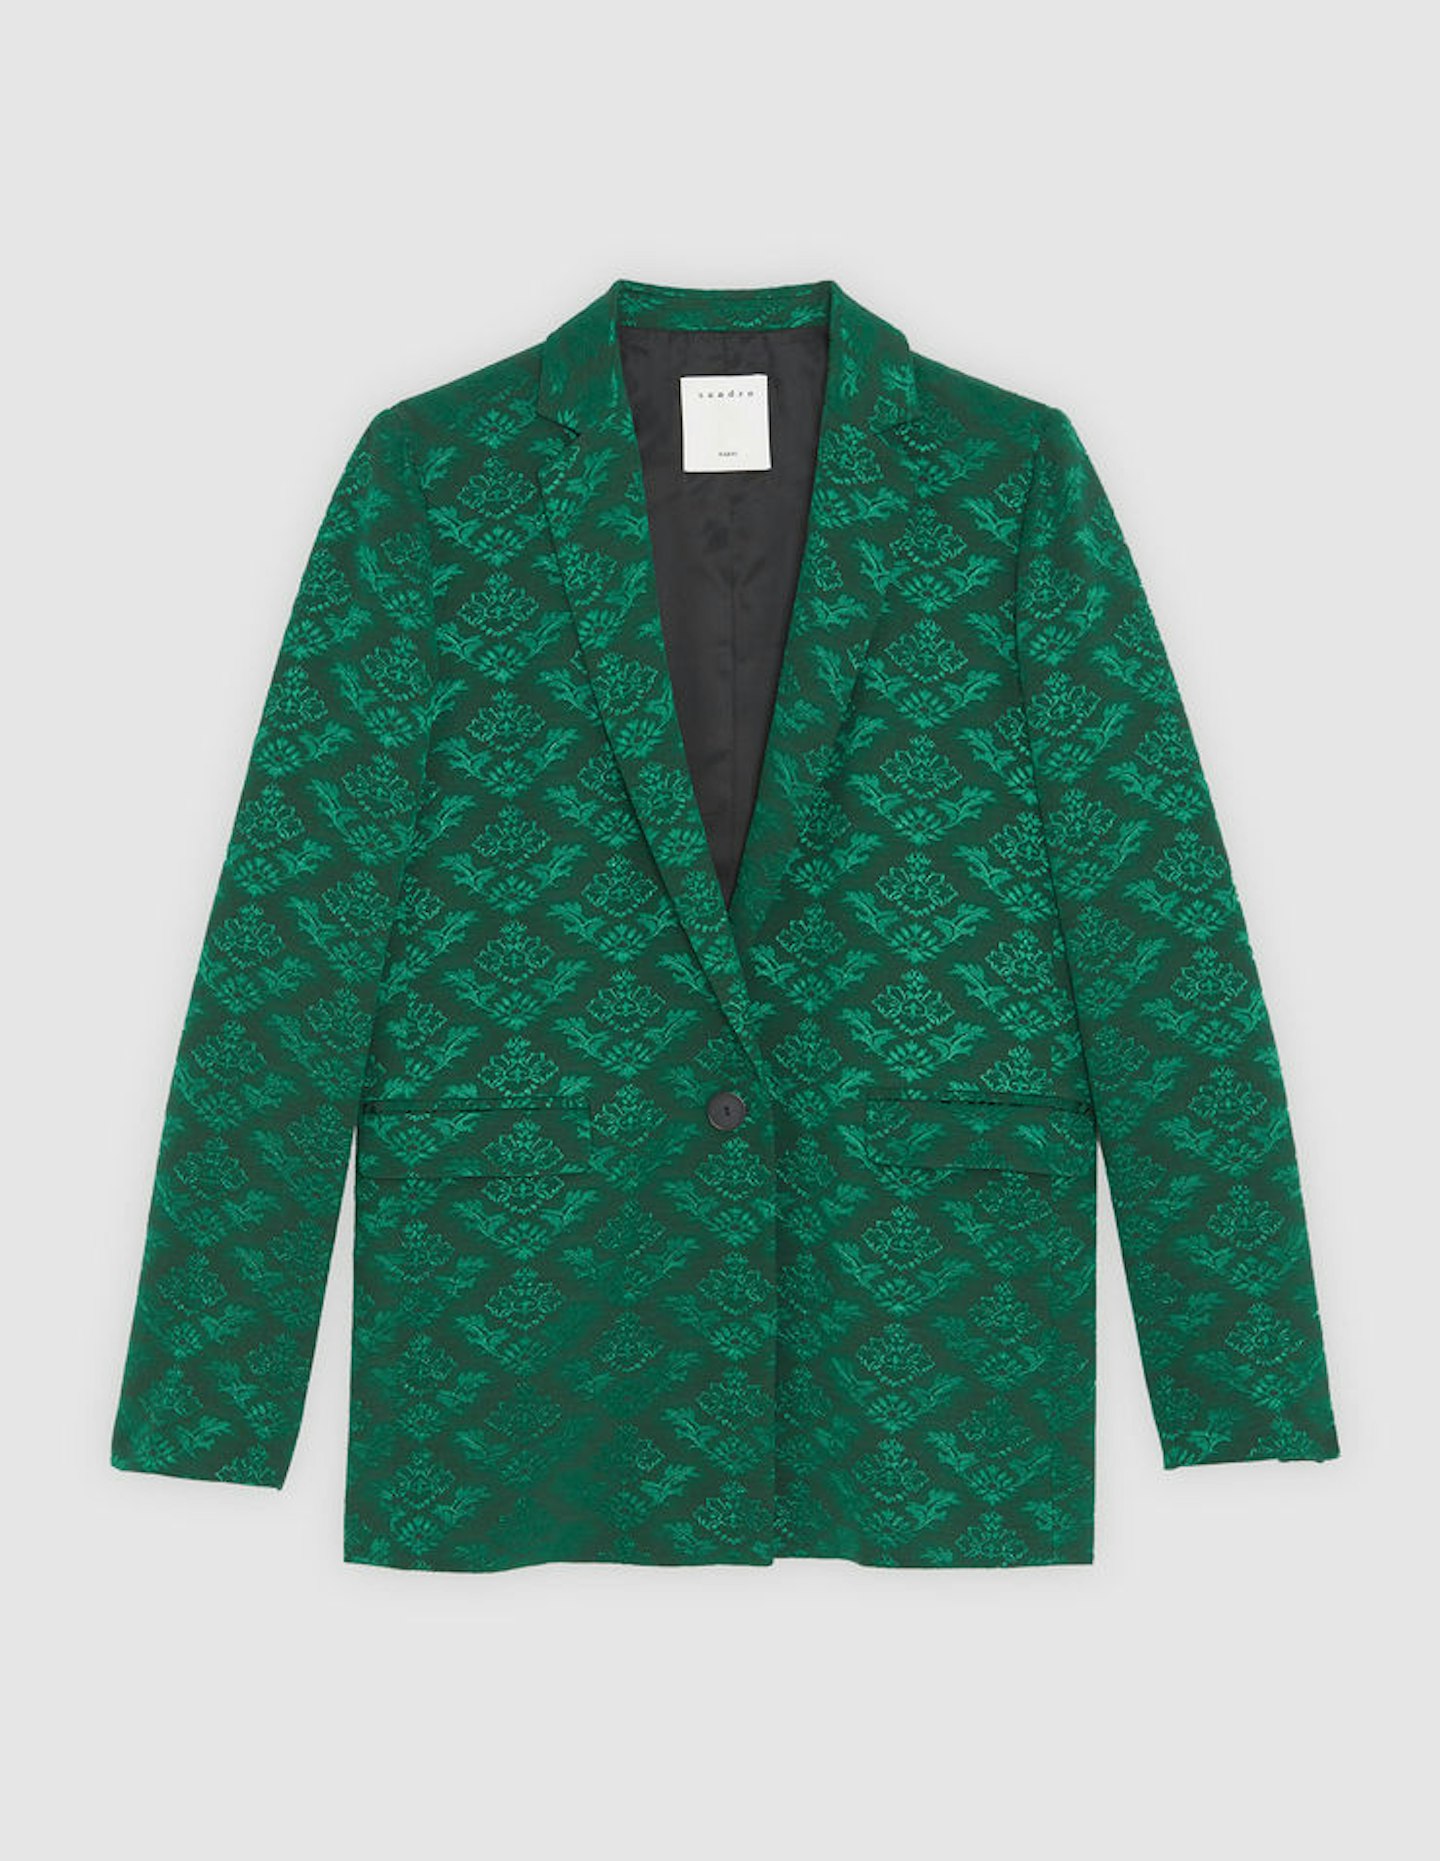 sandro green blazer